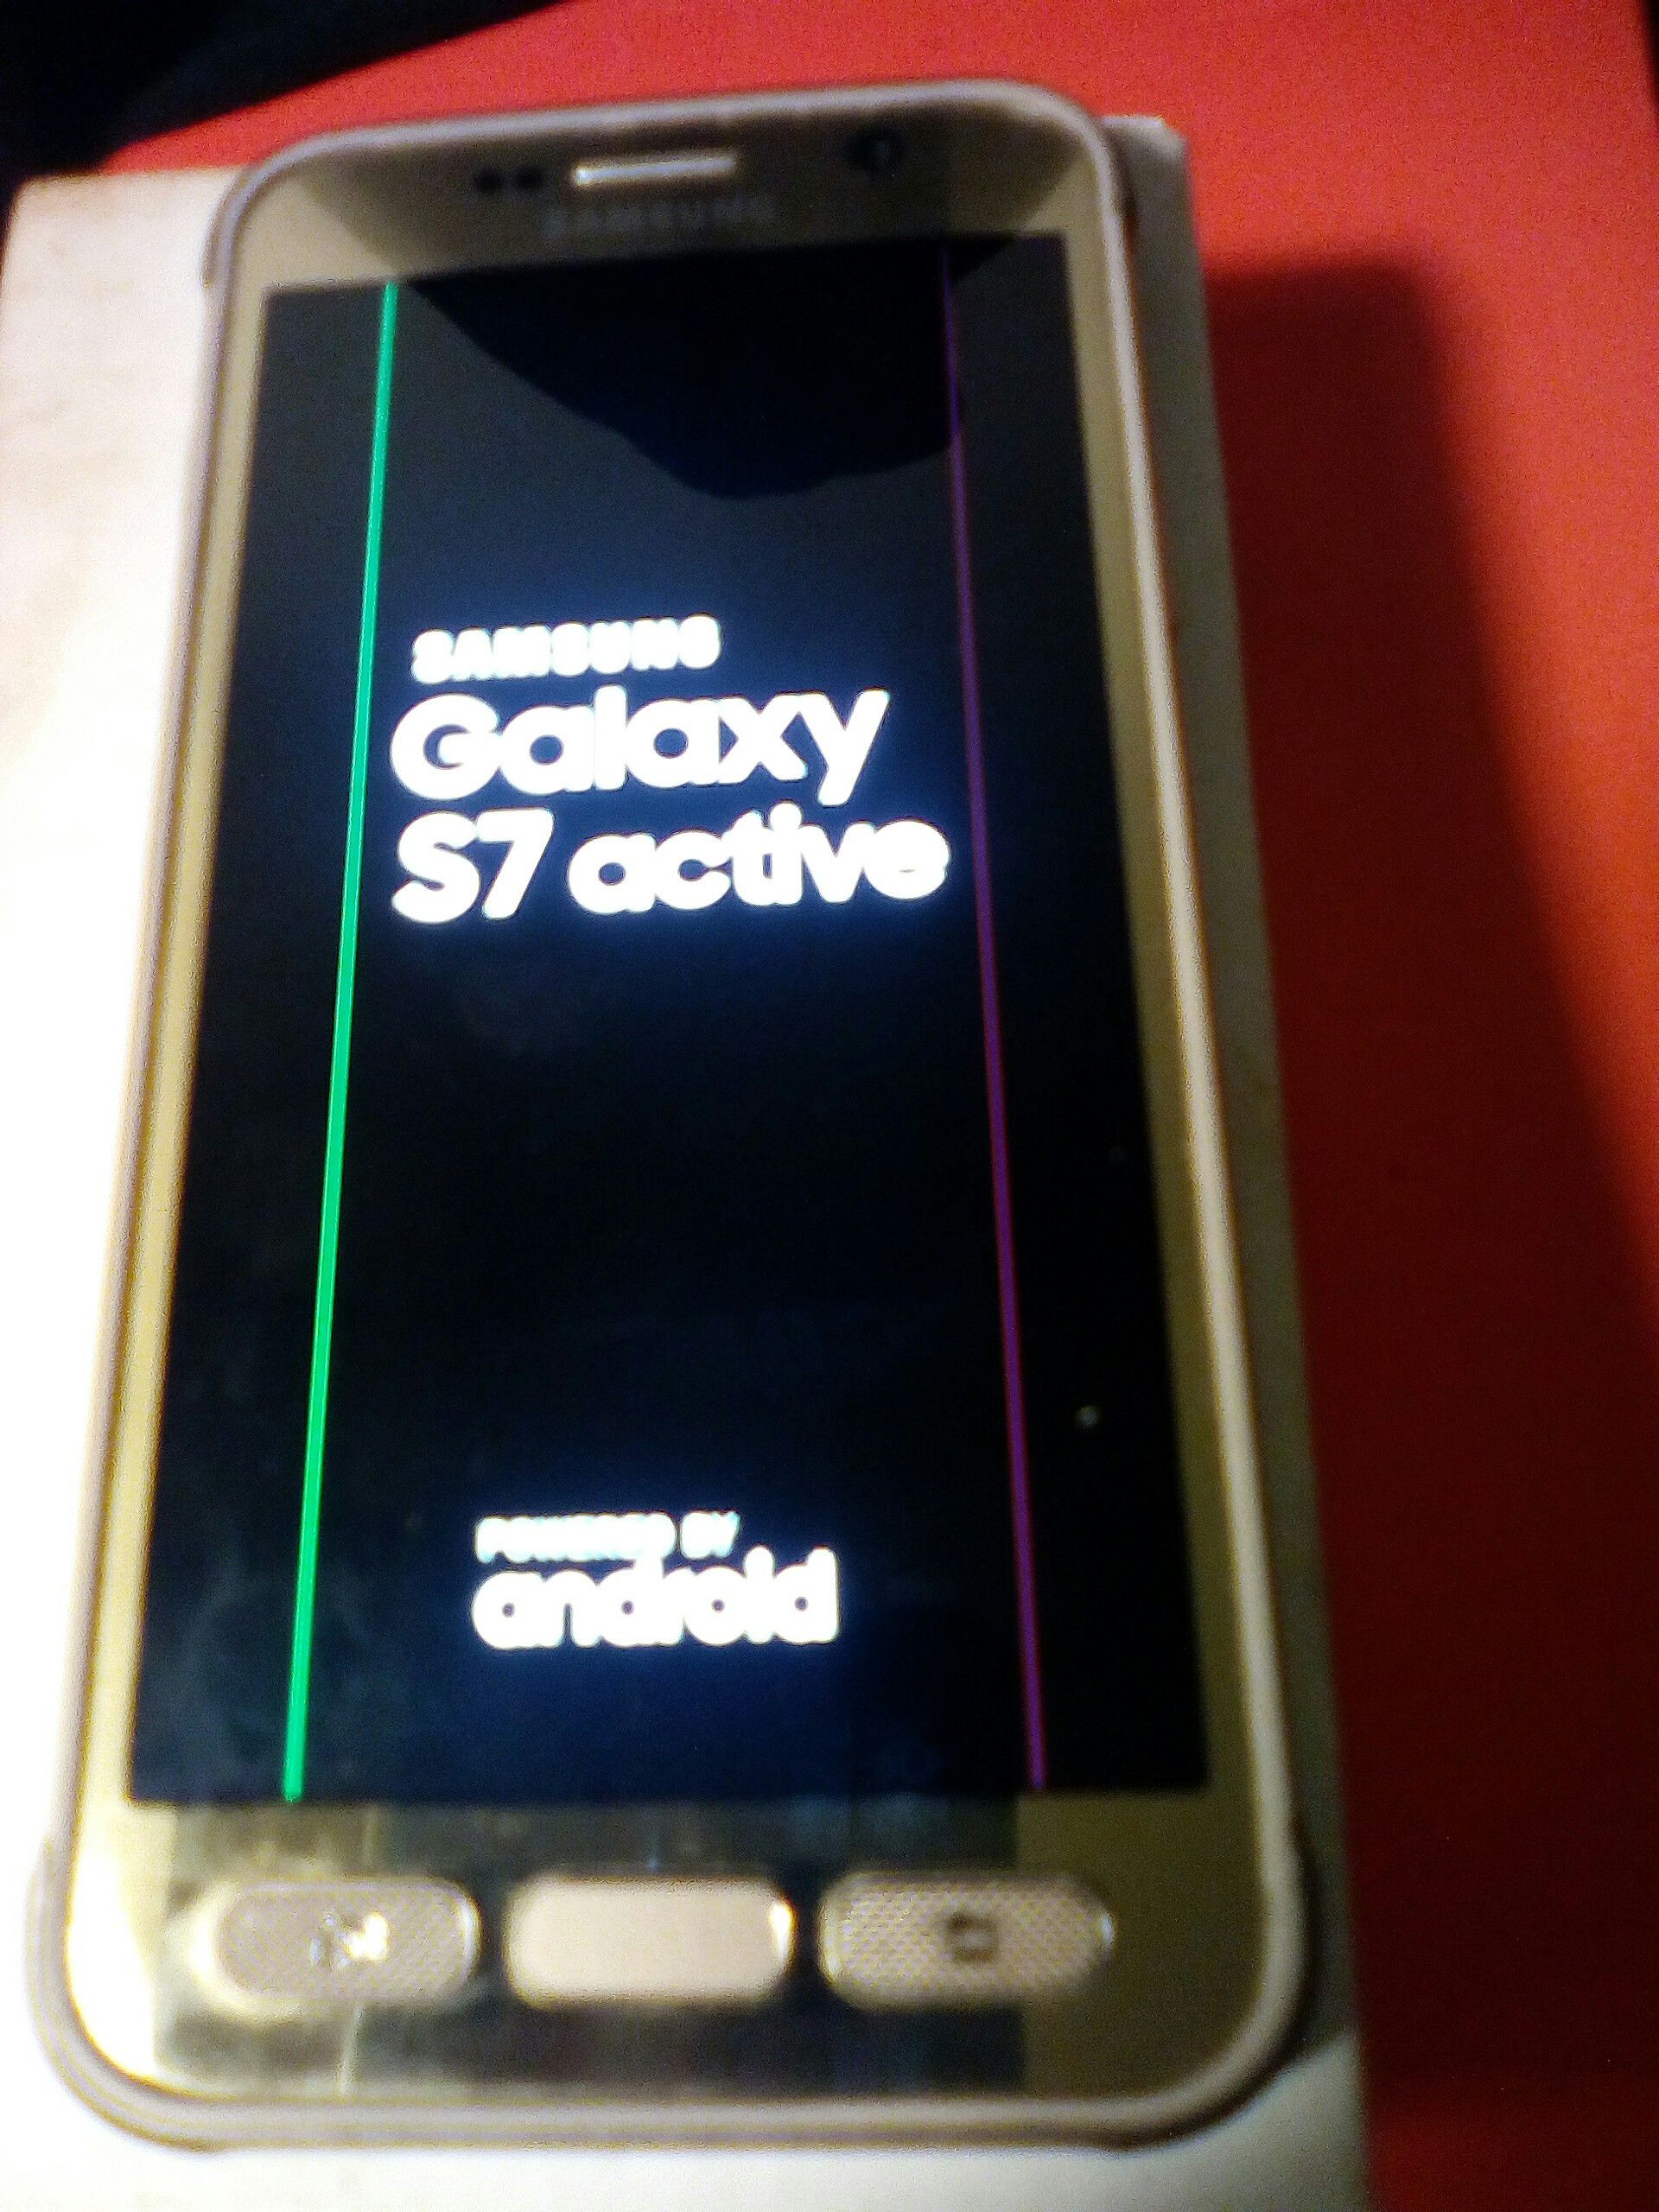 Samsung galaxy S7 active unlocked